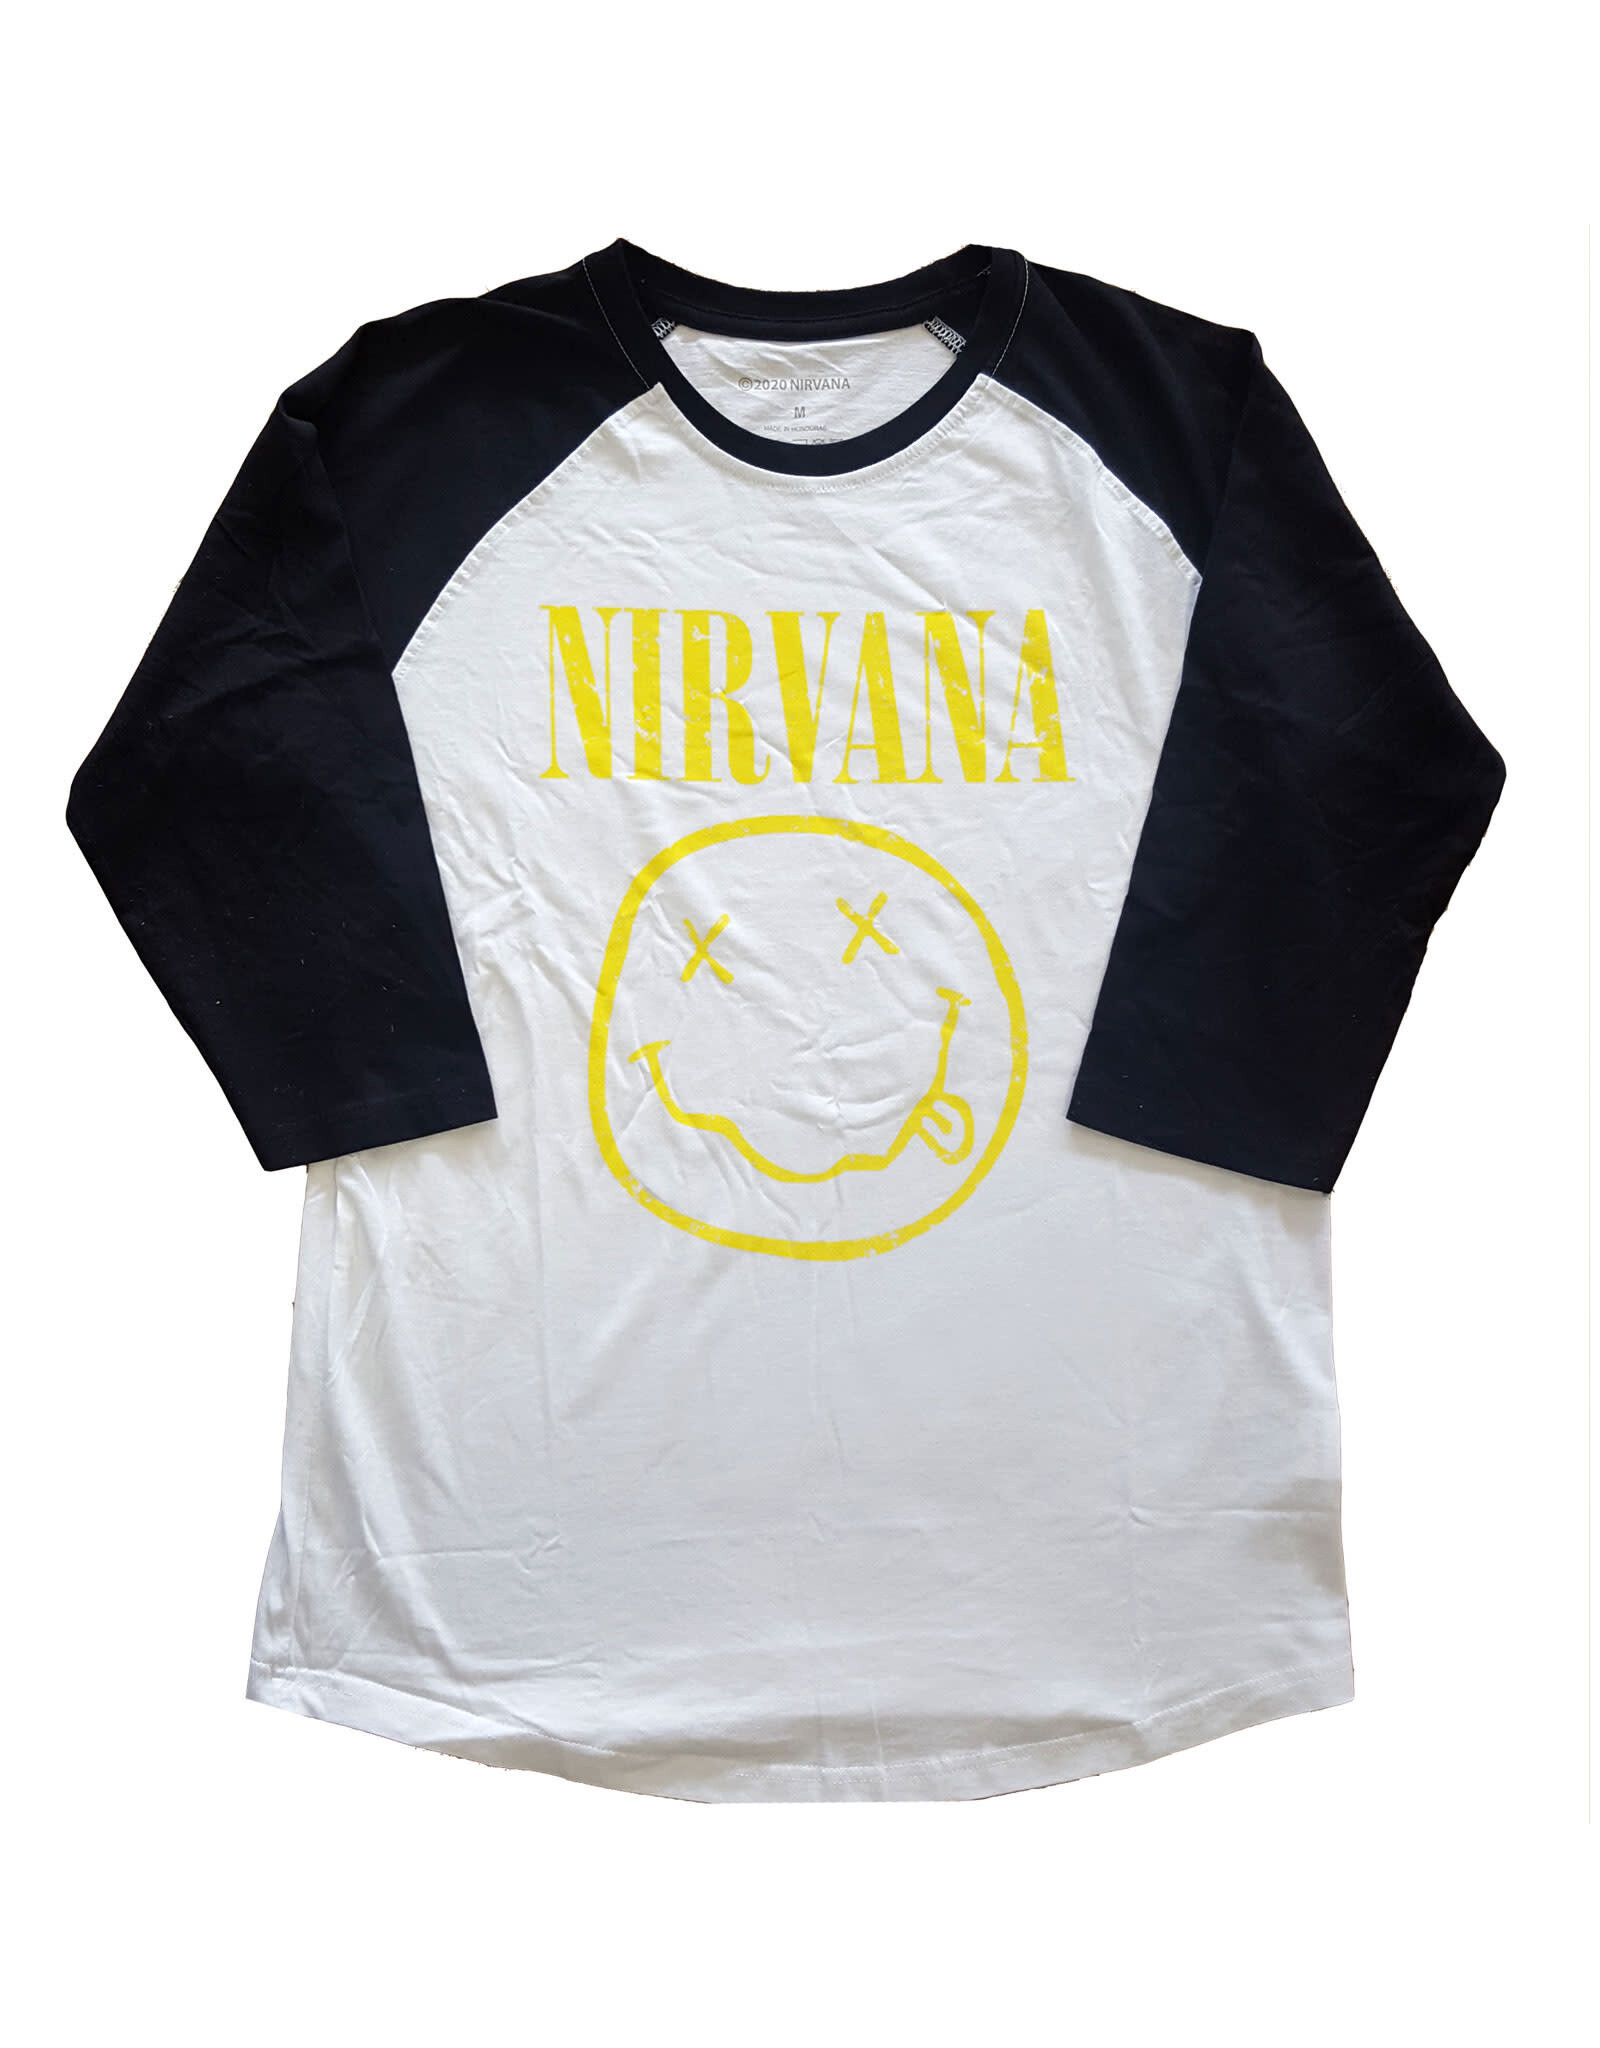 Nirvana - Smiley Face Raglan Baseball T-Shirt - Pop Music